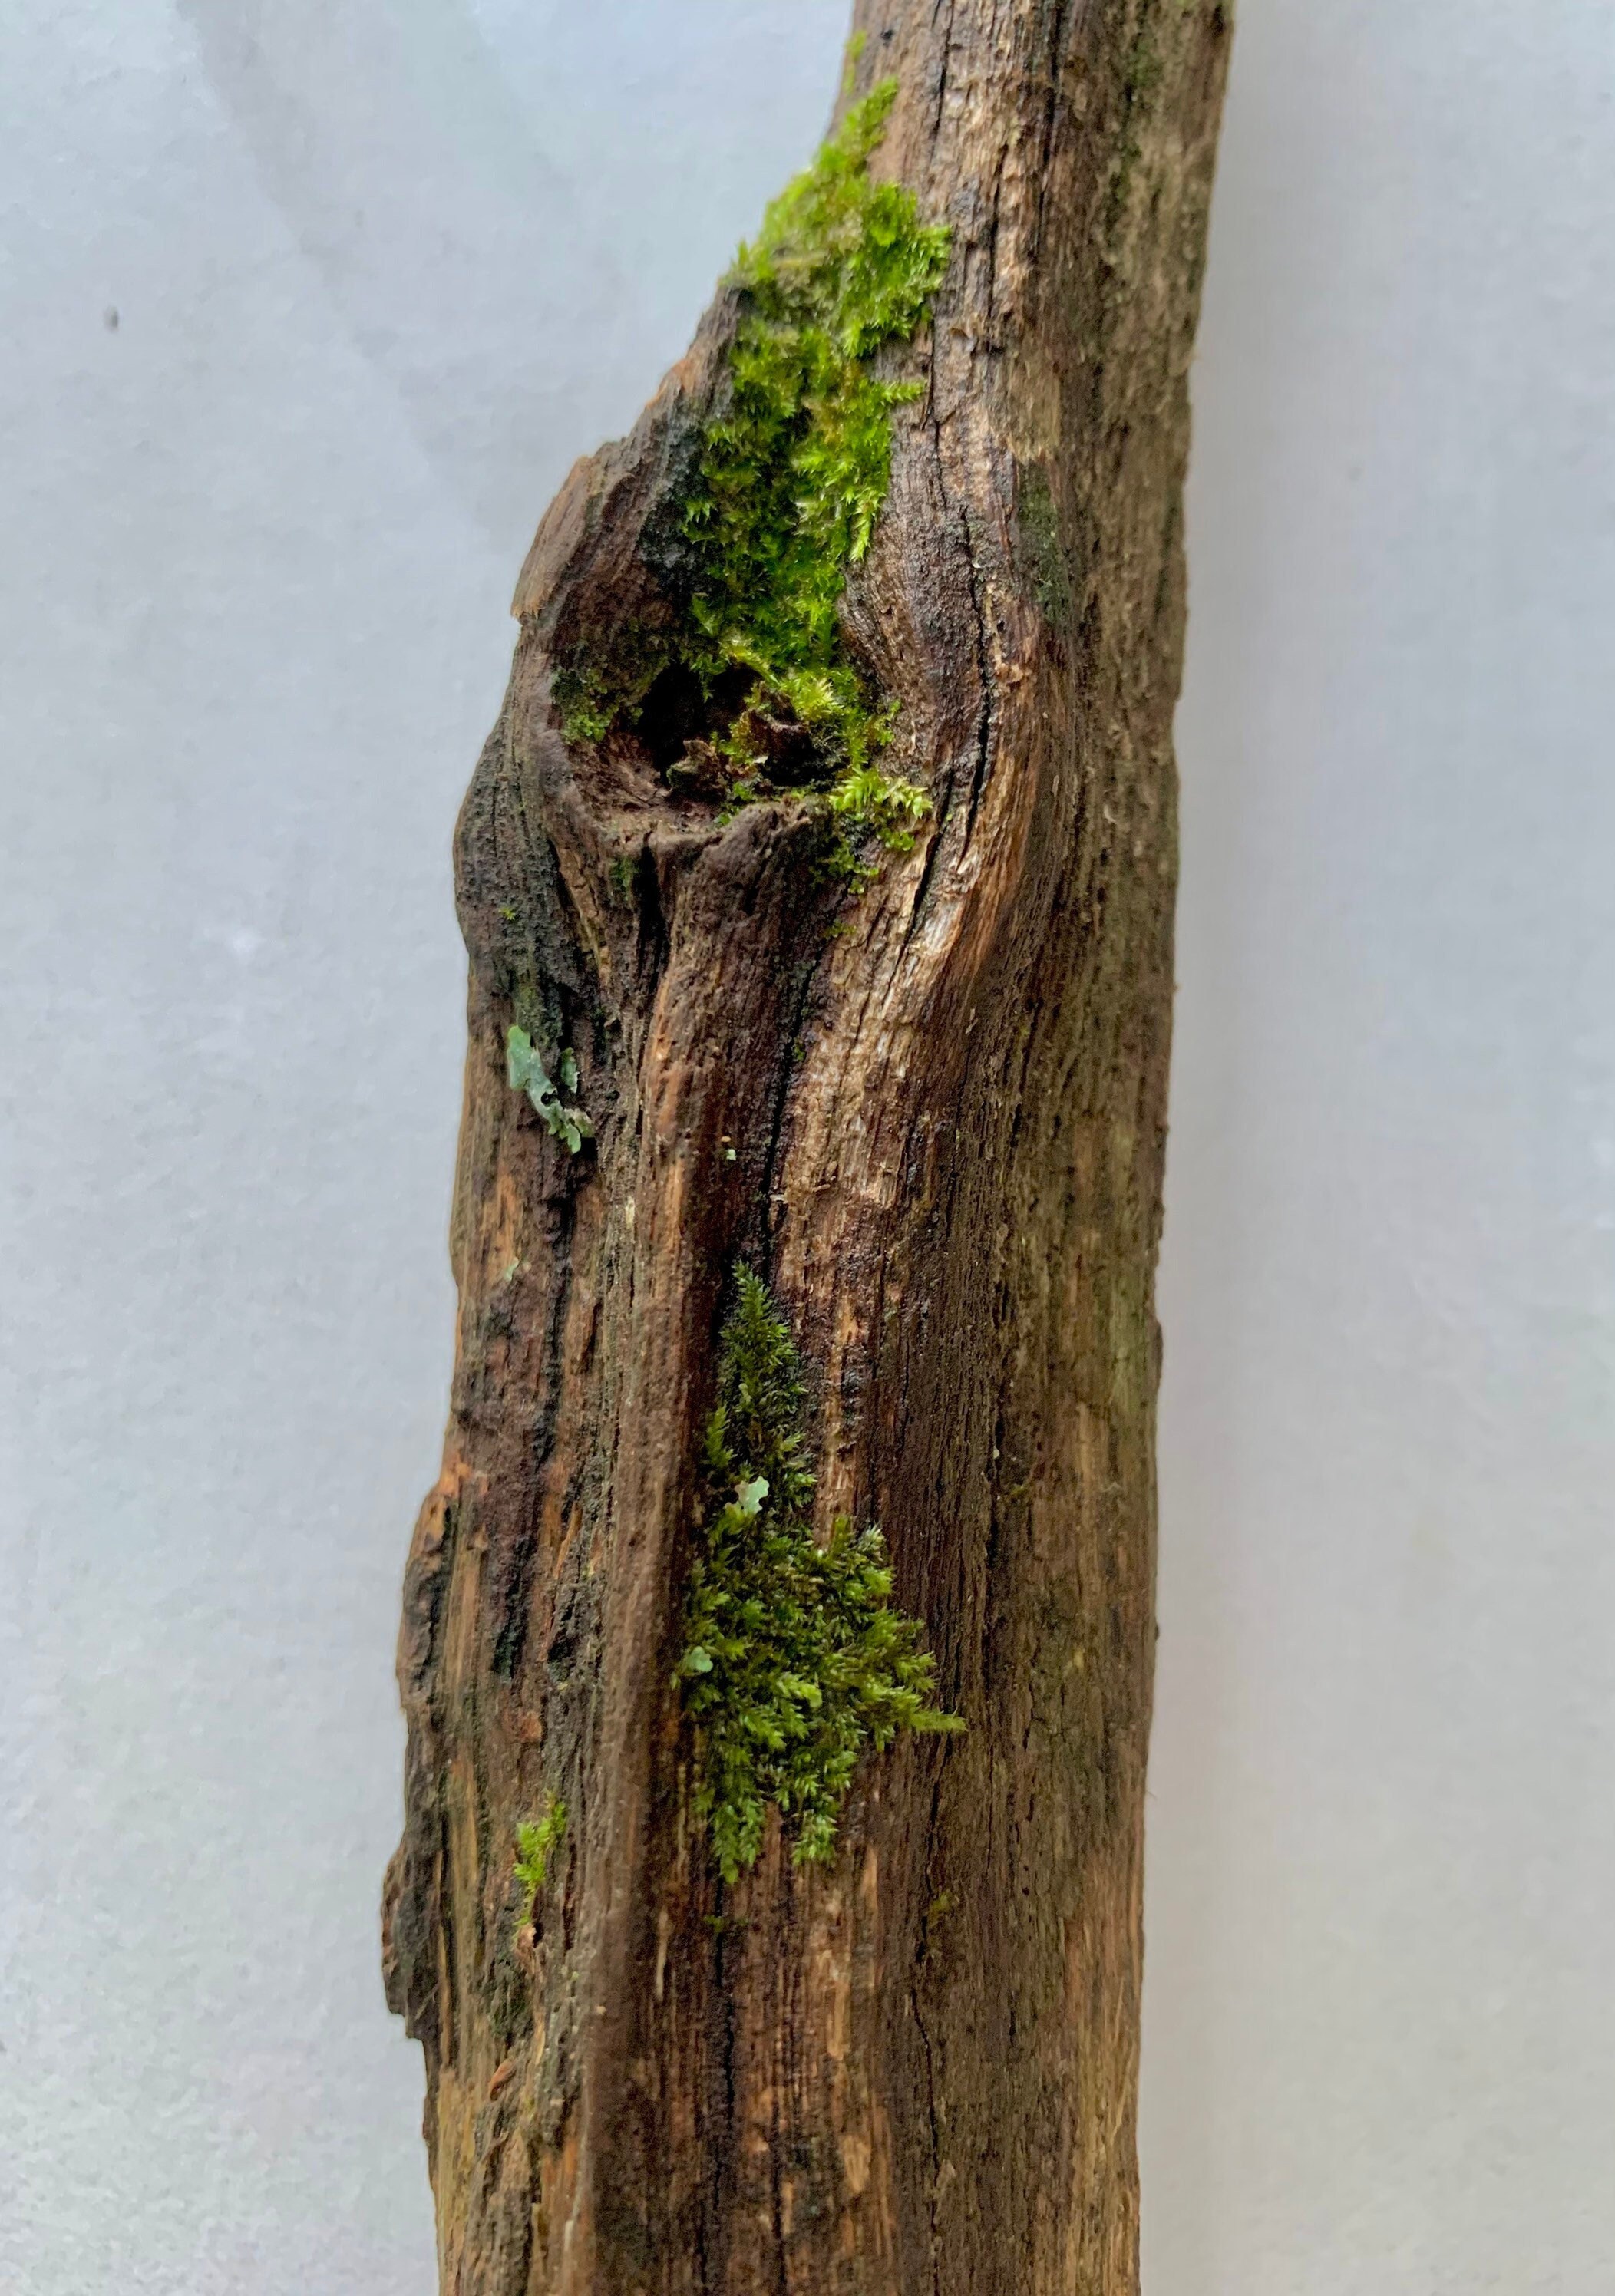  Premium New Zealand Sphagnum Moss by Gardenera